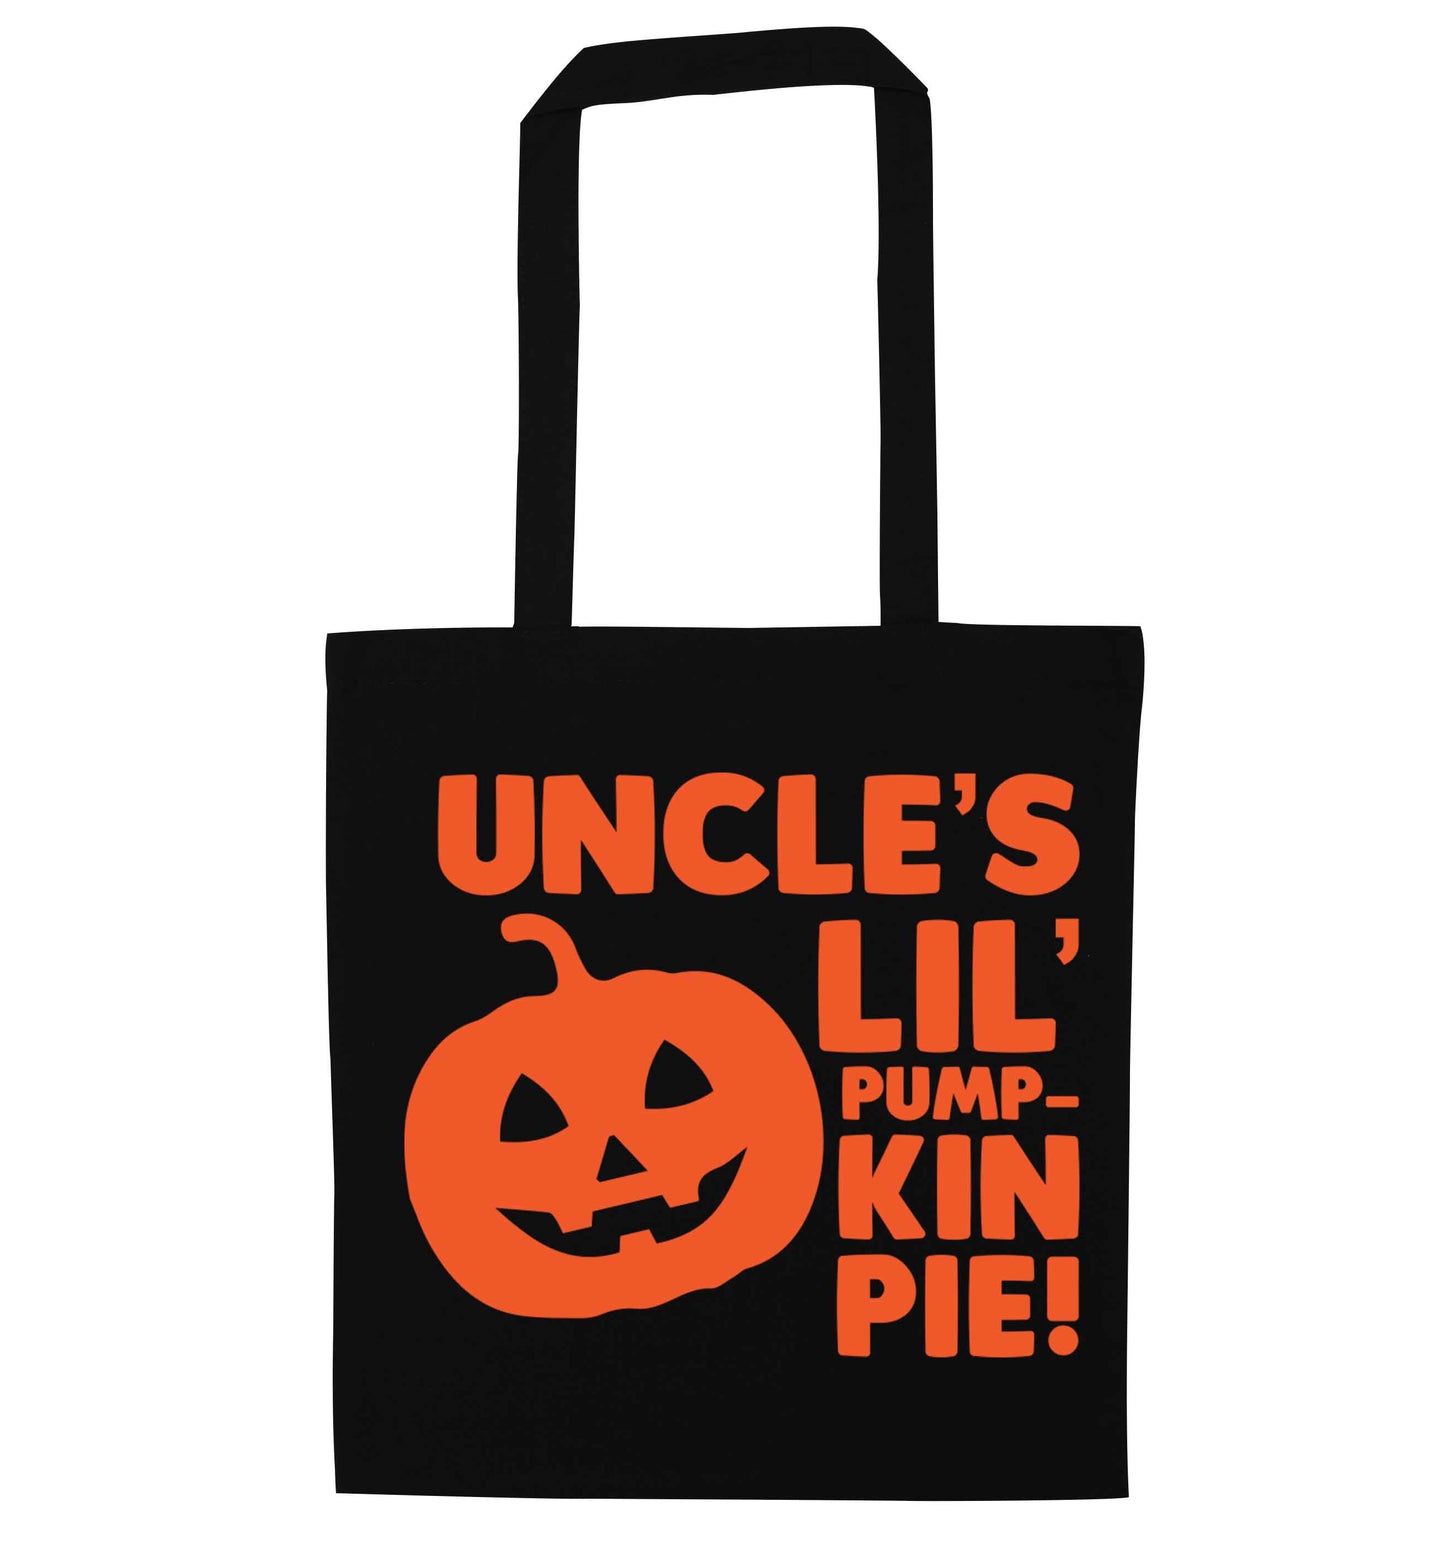 Uncle's lil' pumpkin pie black tote bag